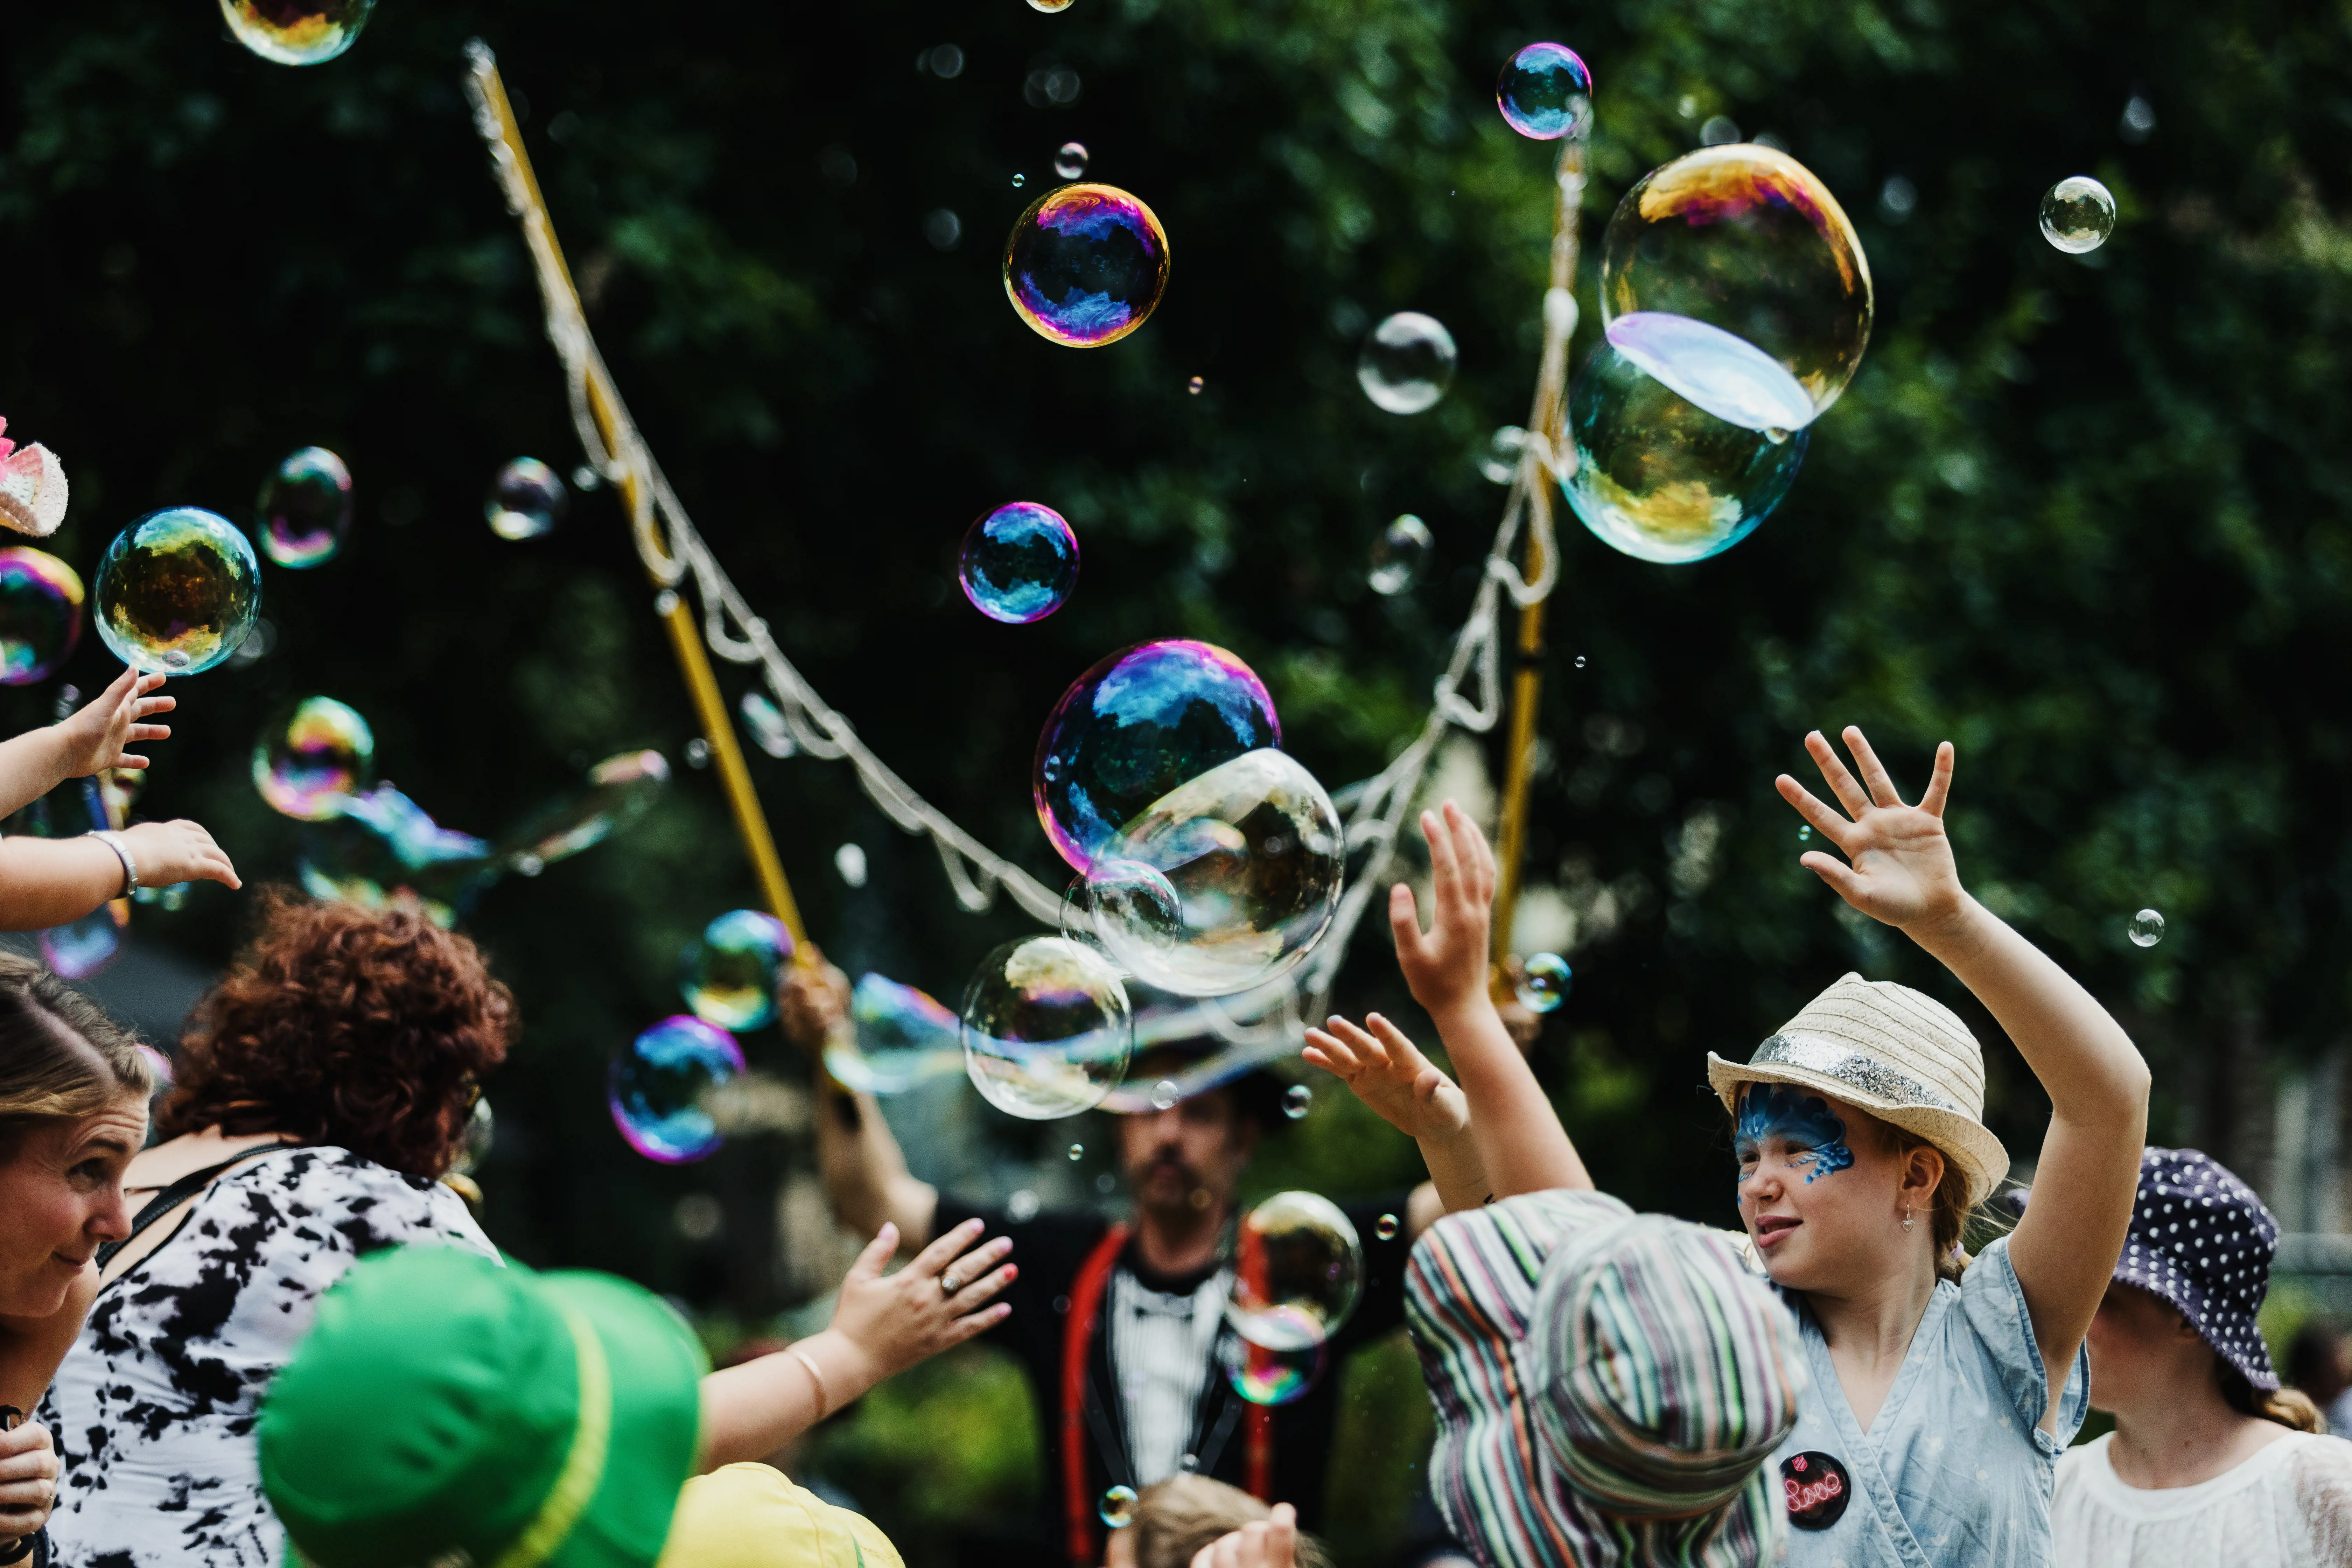 A group of festival goers dance amongst bubbles in the park as part of Launceston's Festivale.